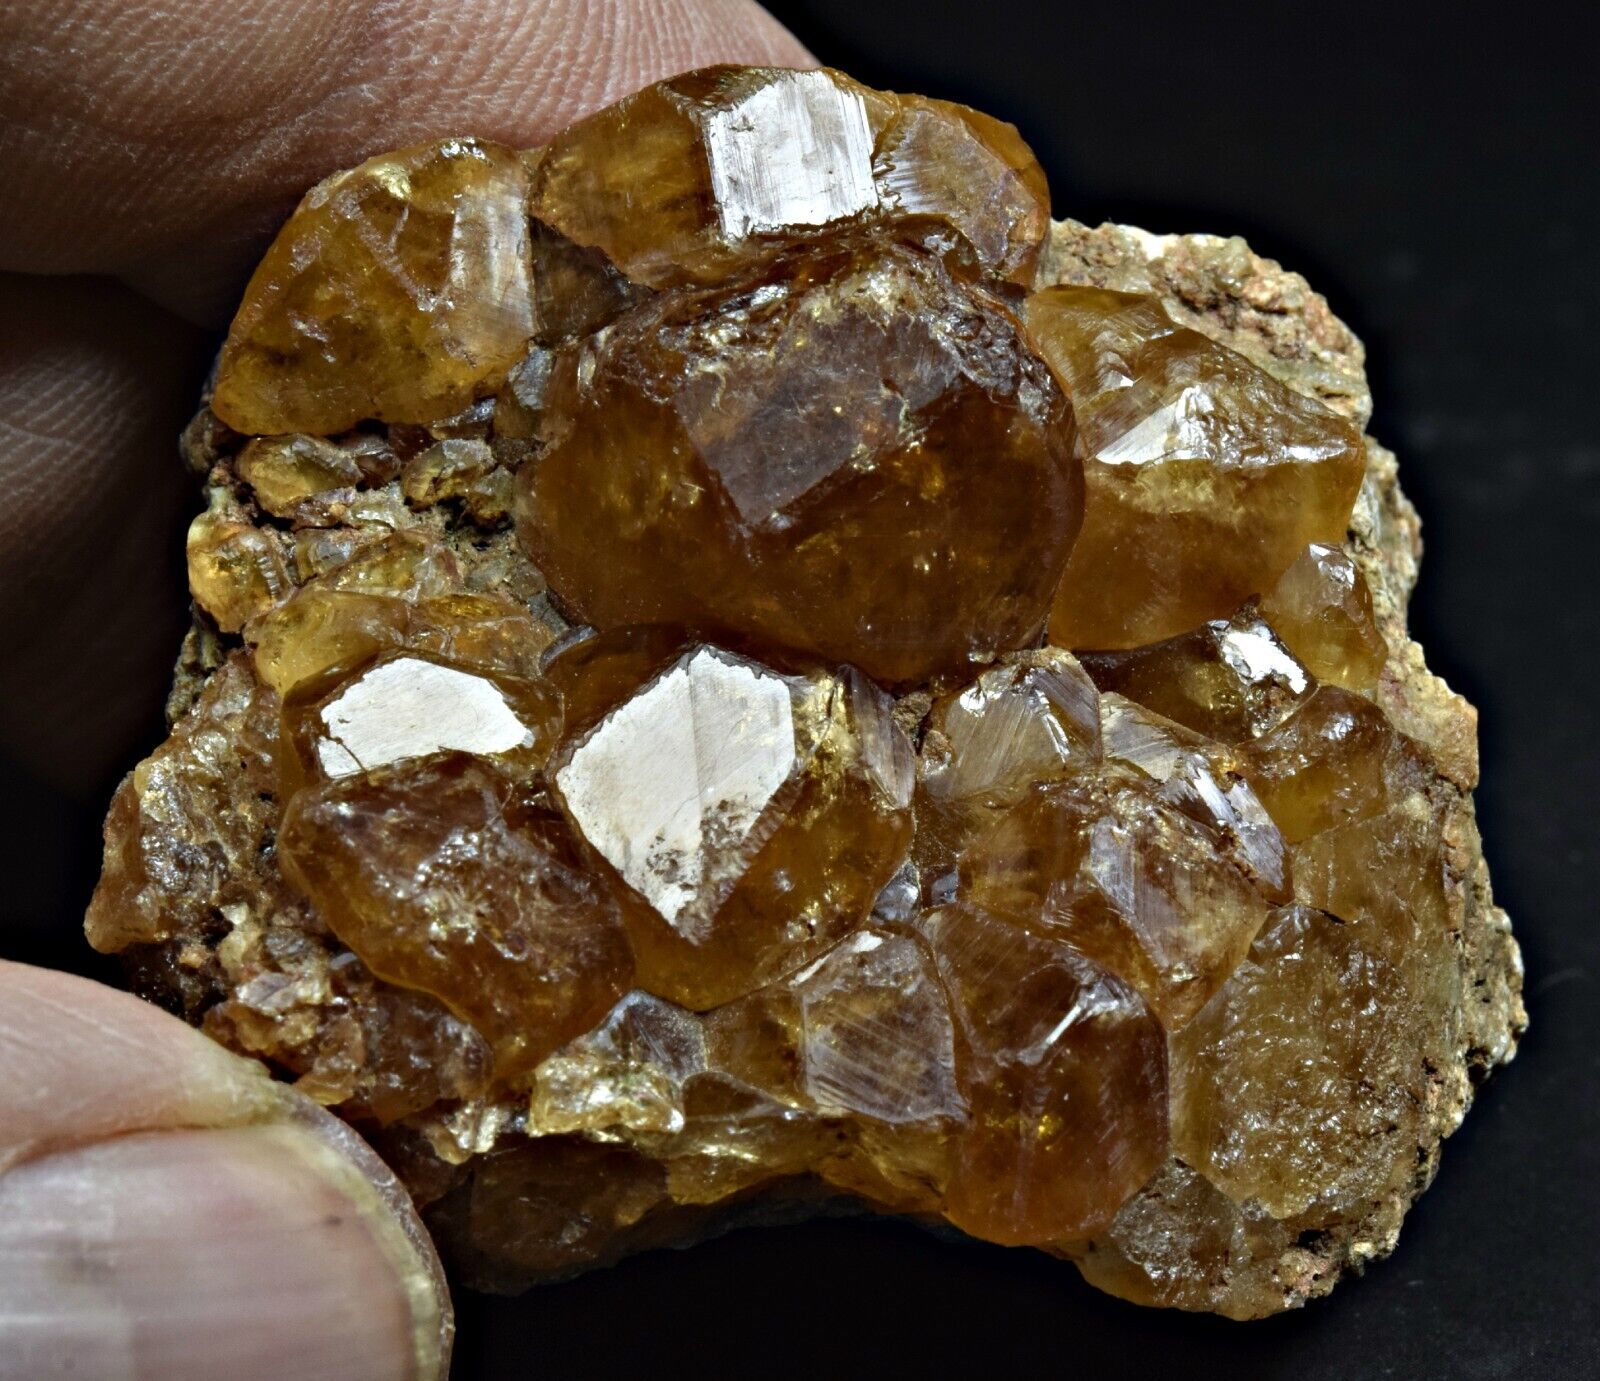 271 Carat NATURAL GROSSULAR GARNET Crystal Specimen From Pakistan